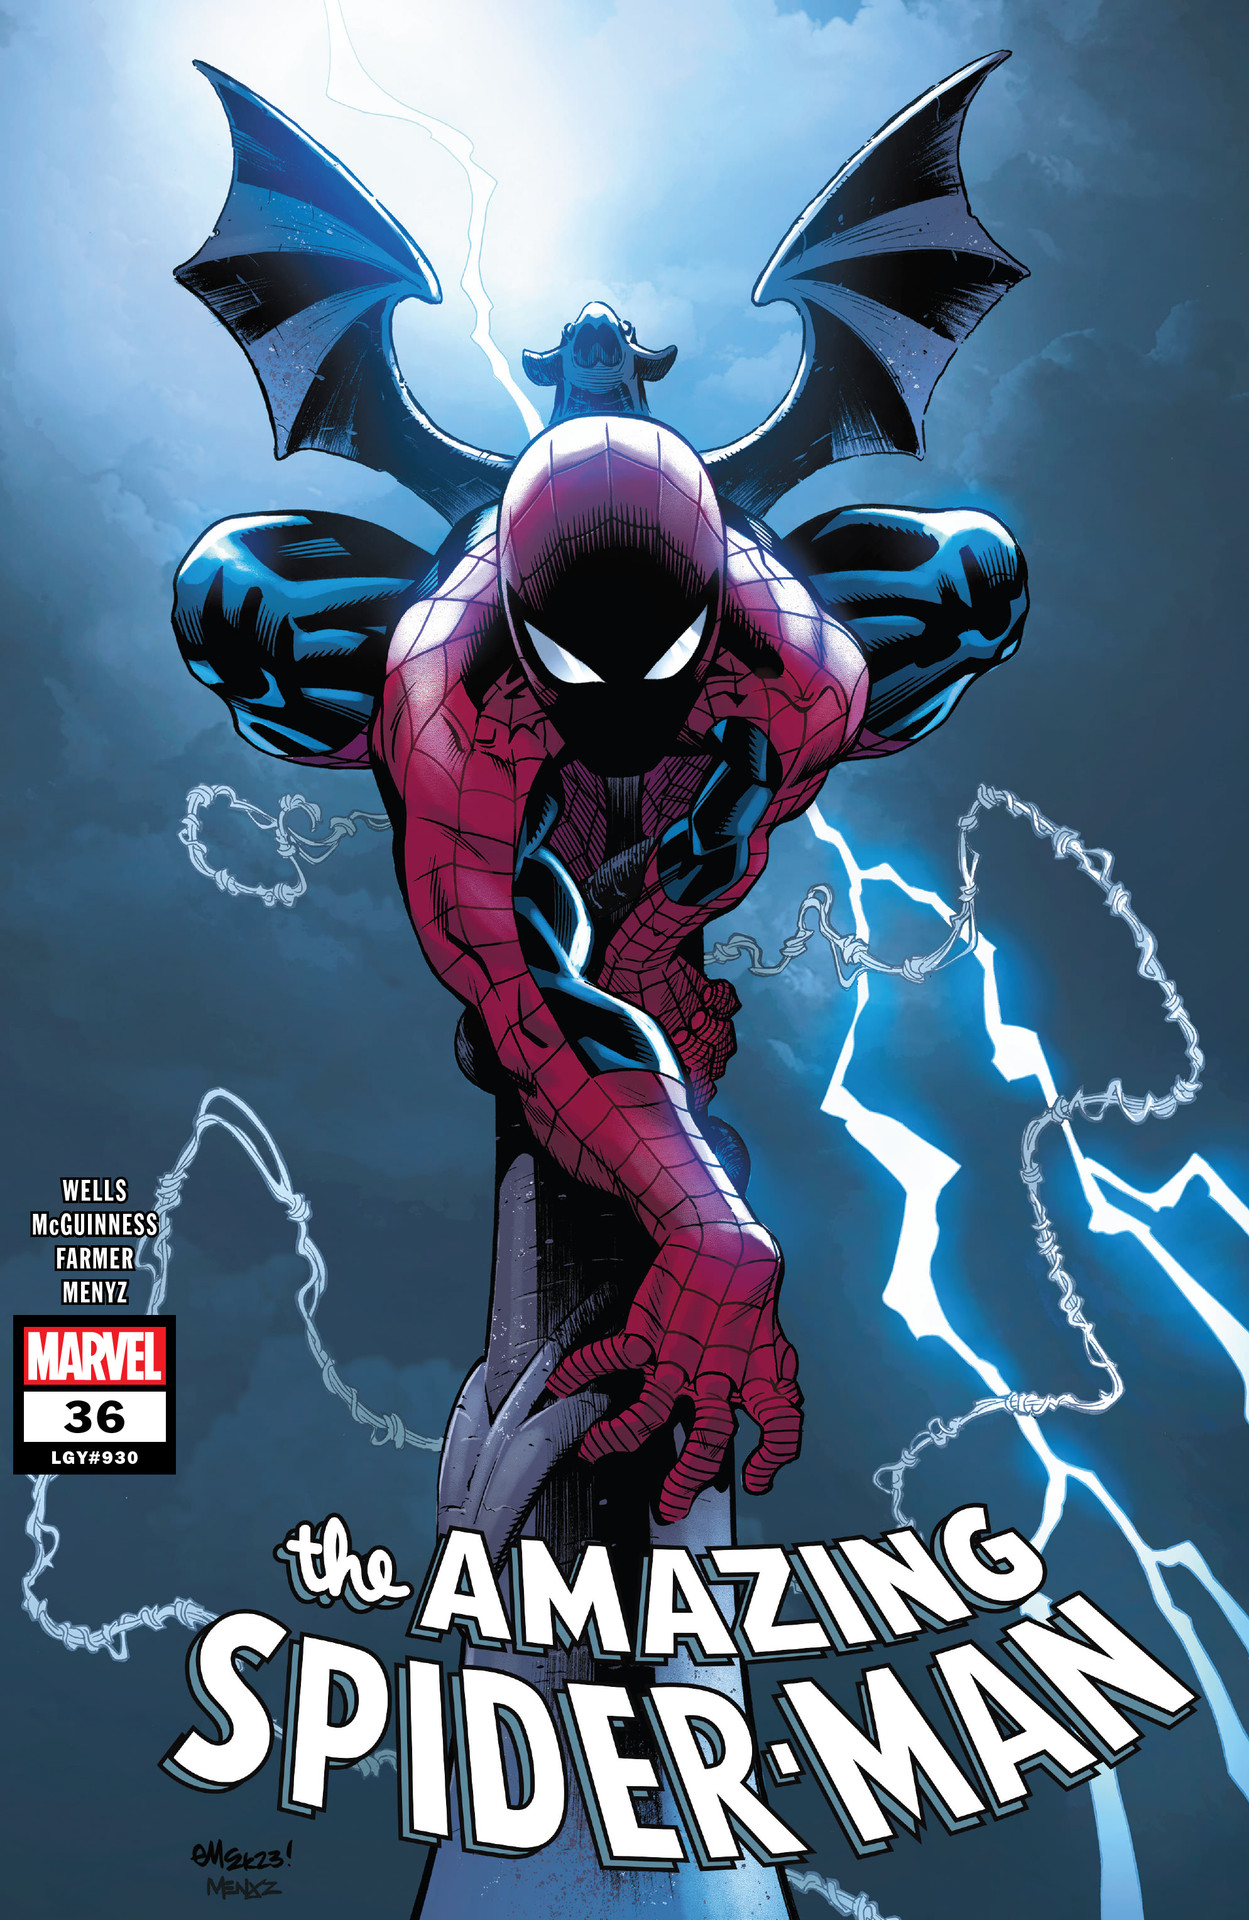 scans_daily  Amazing Spider-Man #25